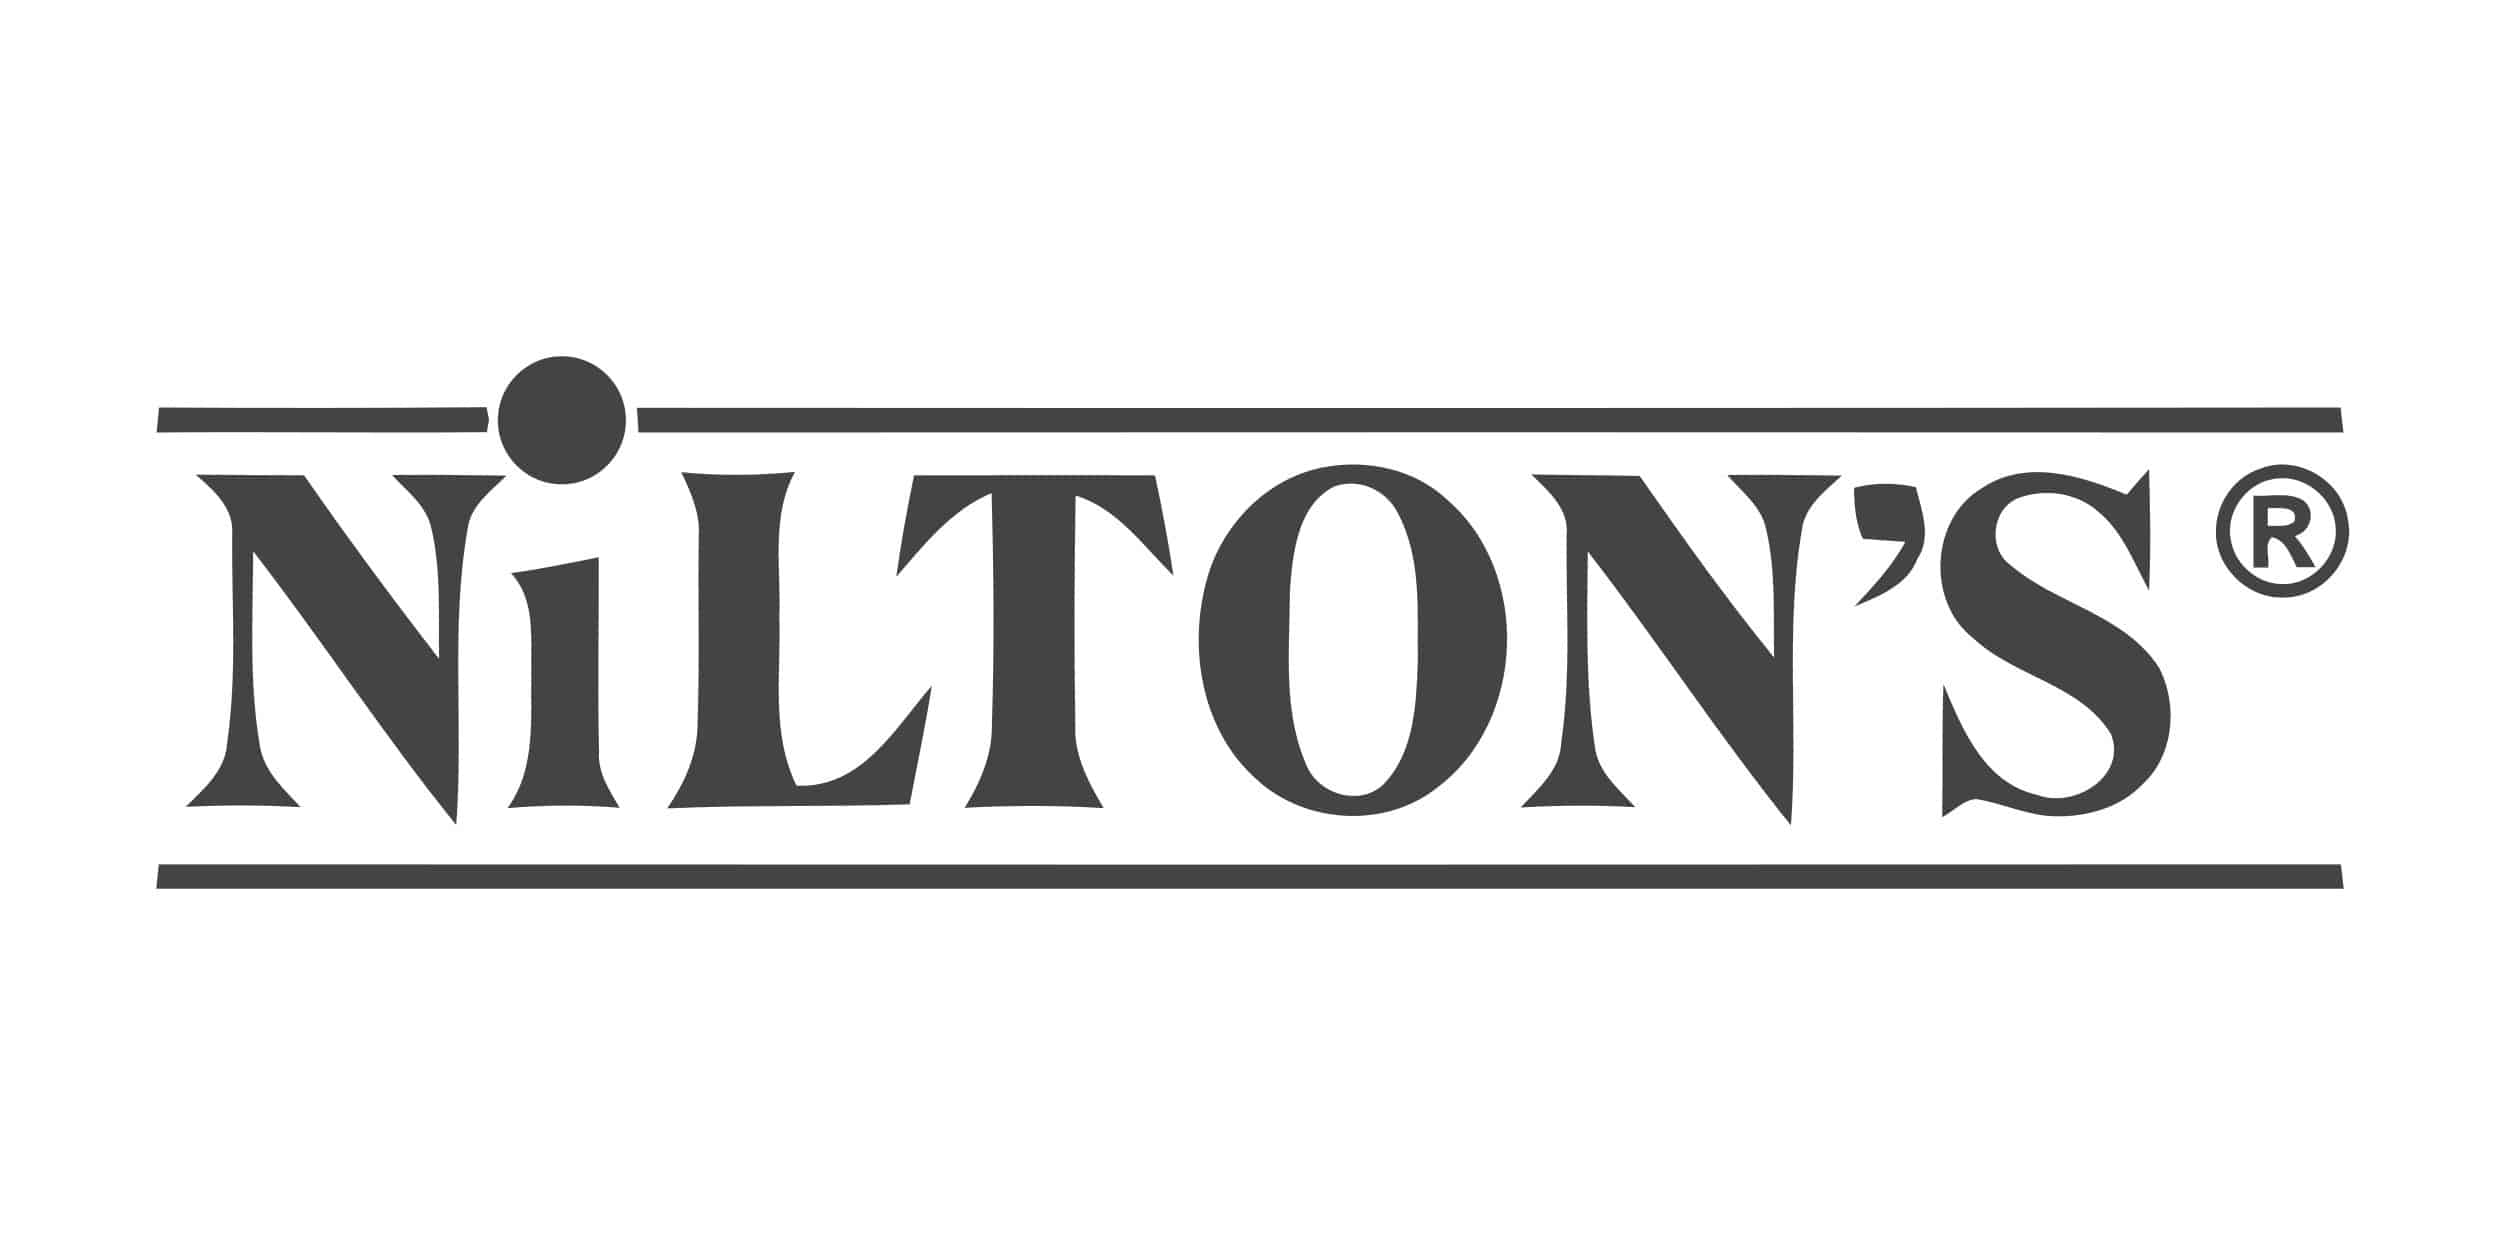 niltons logo